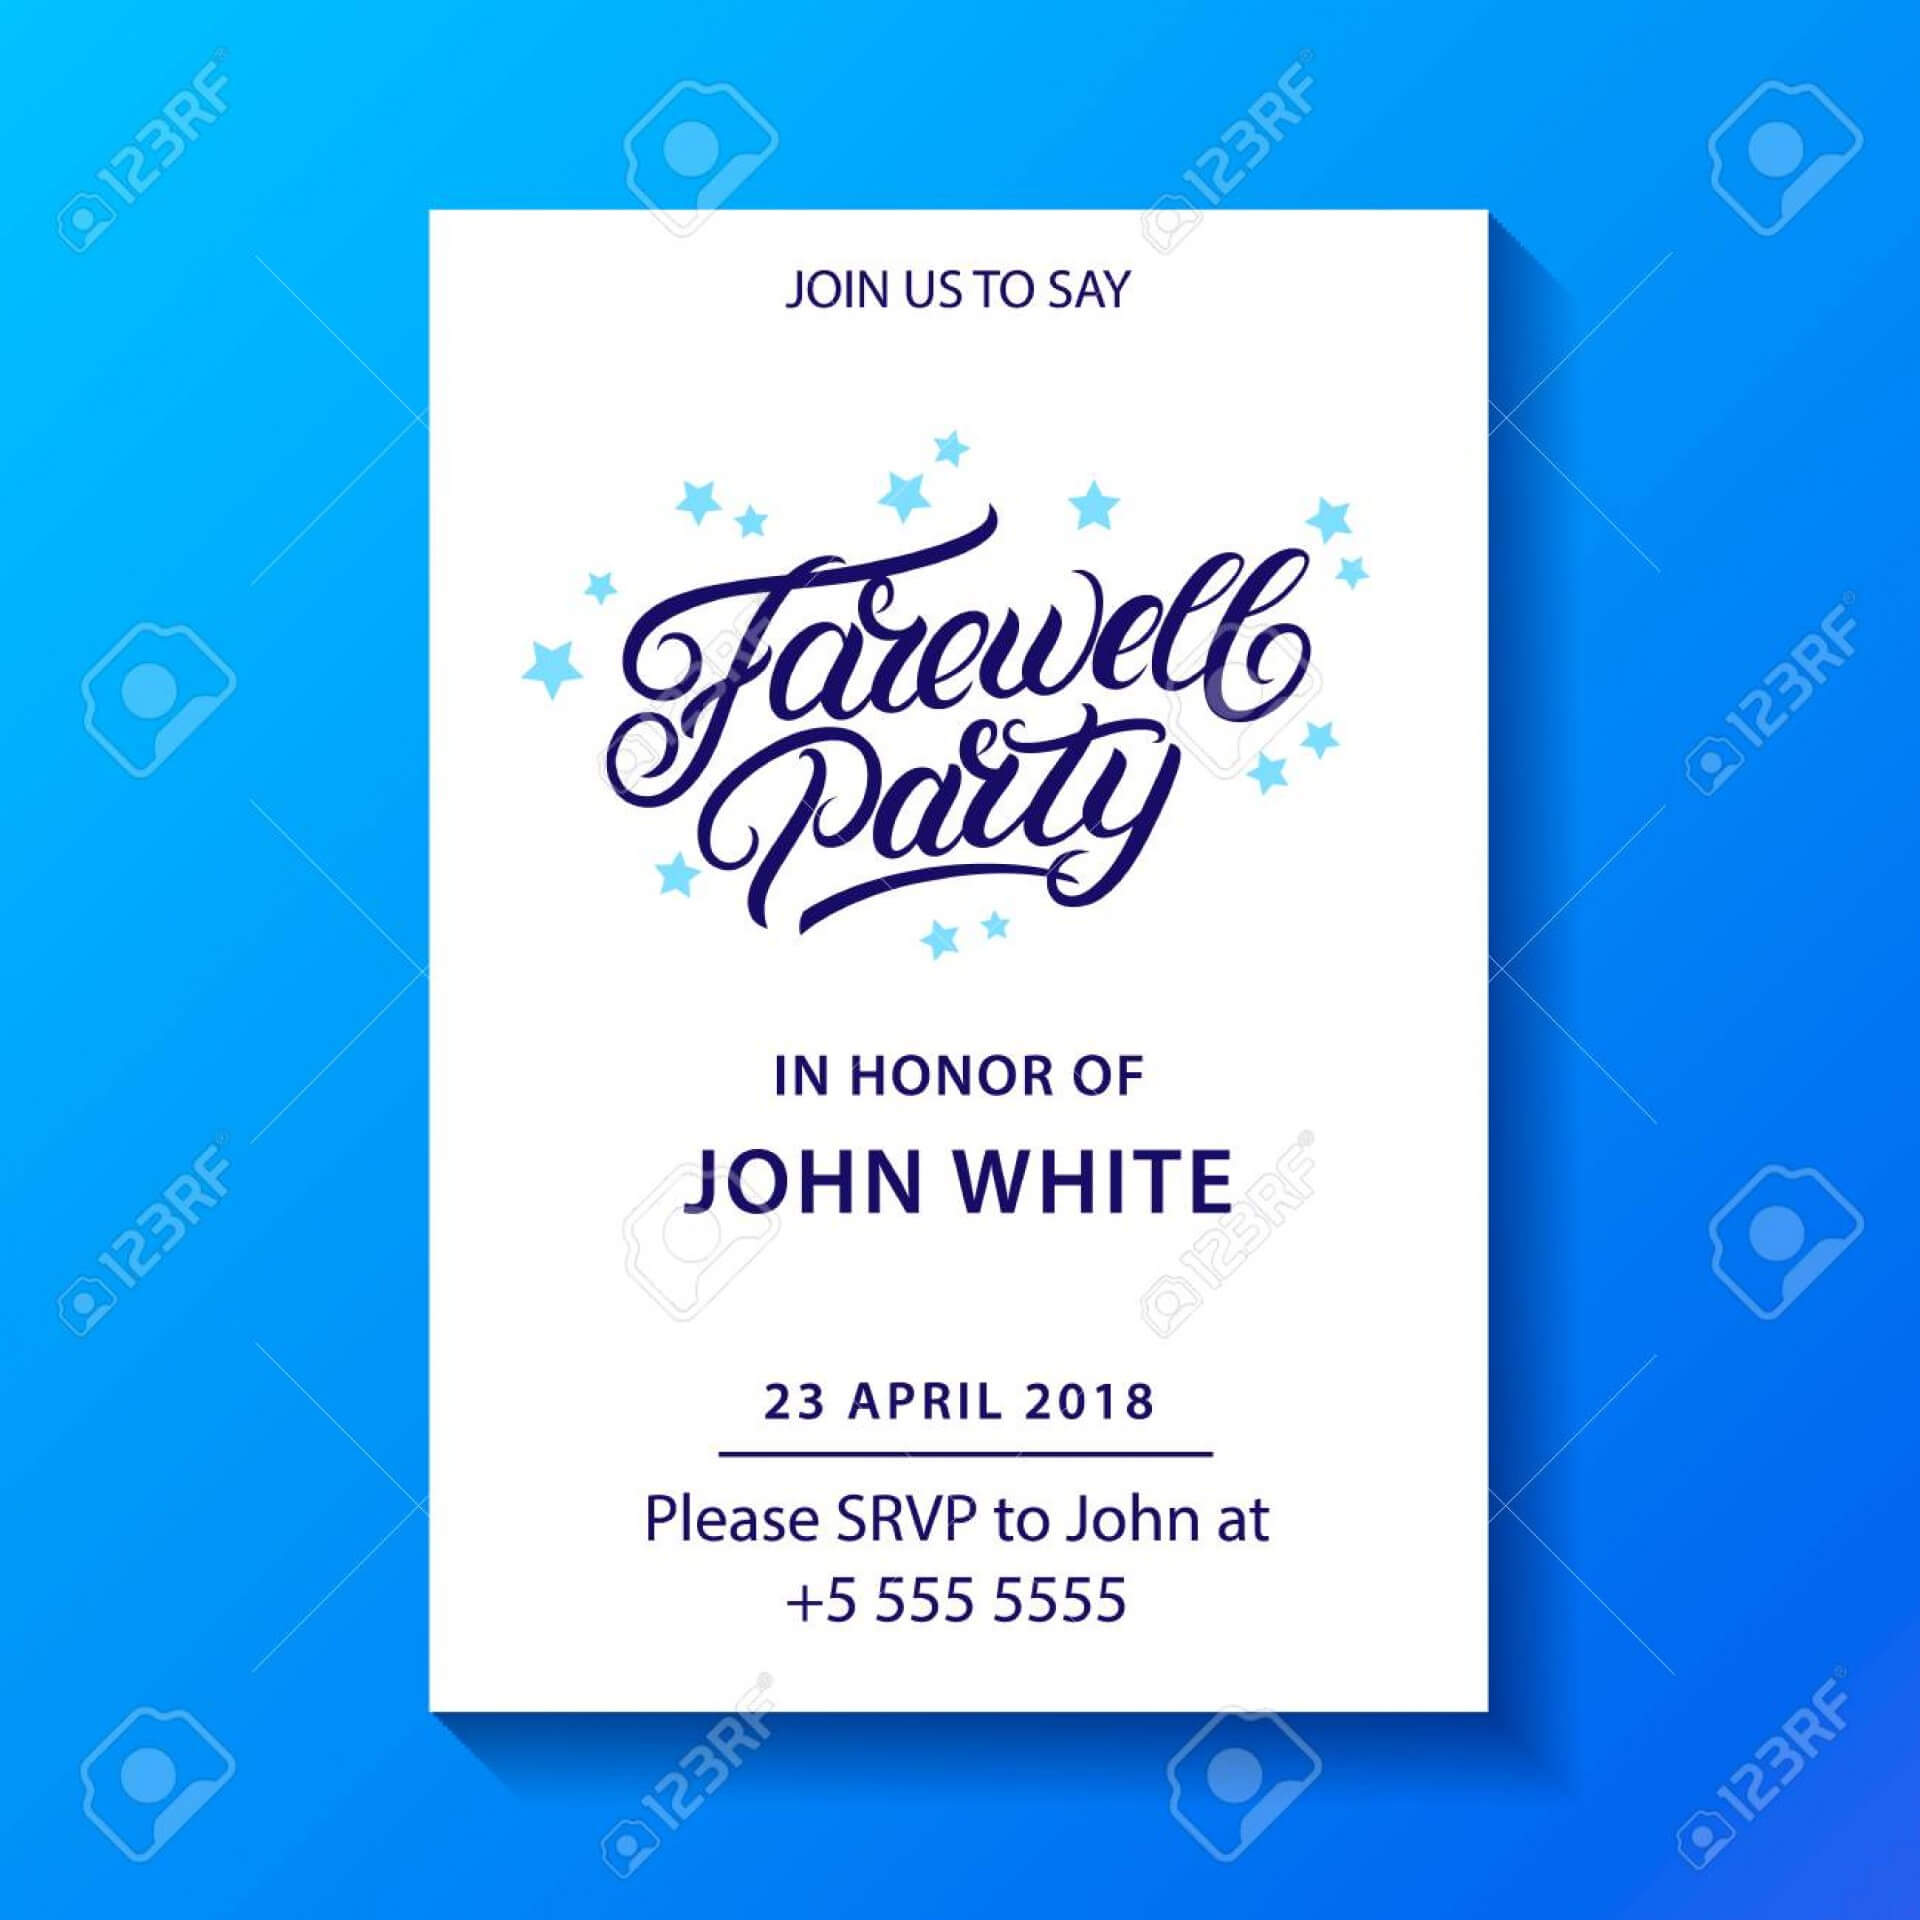 027 Template Ideas Printable Farewell Card Going Away Party Regarding Farewell Invitation Card Template